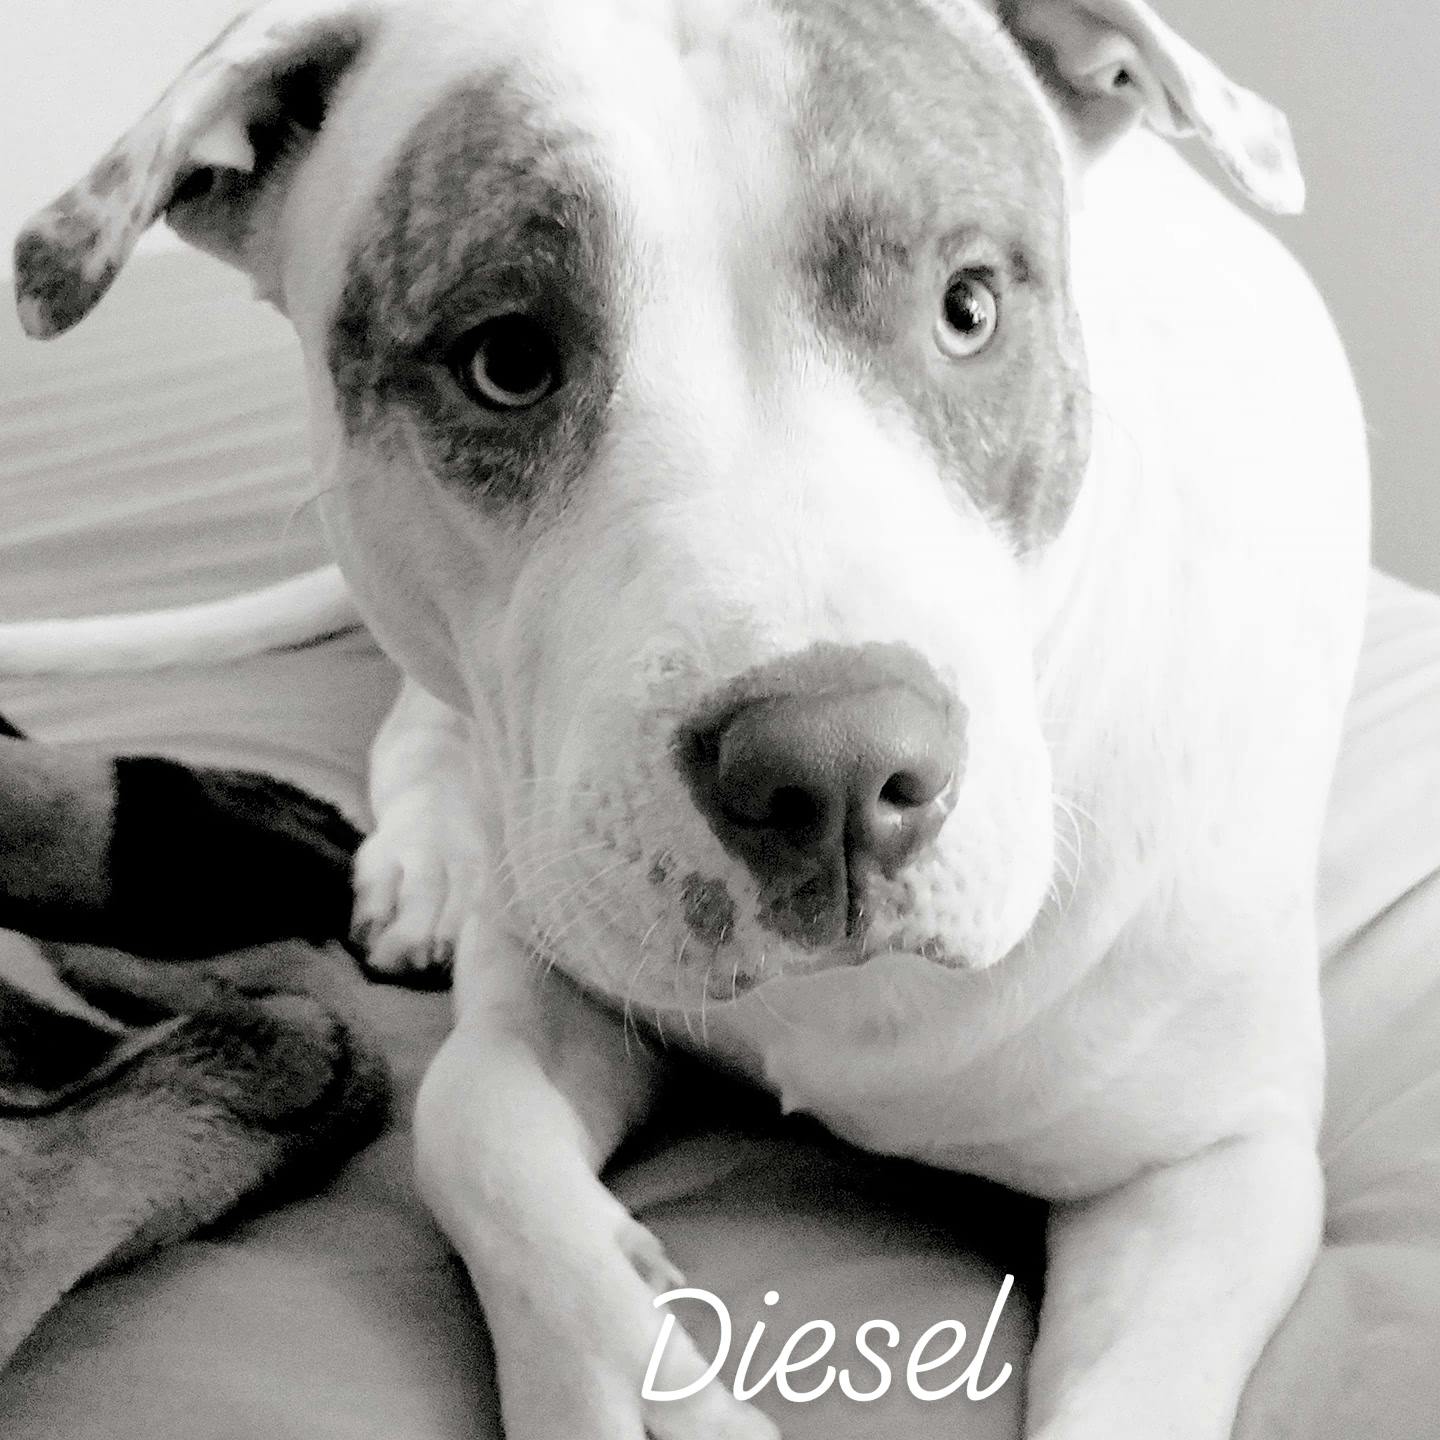 Diesel's name story for Arizona Dog Names